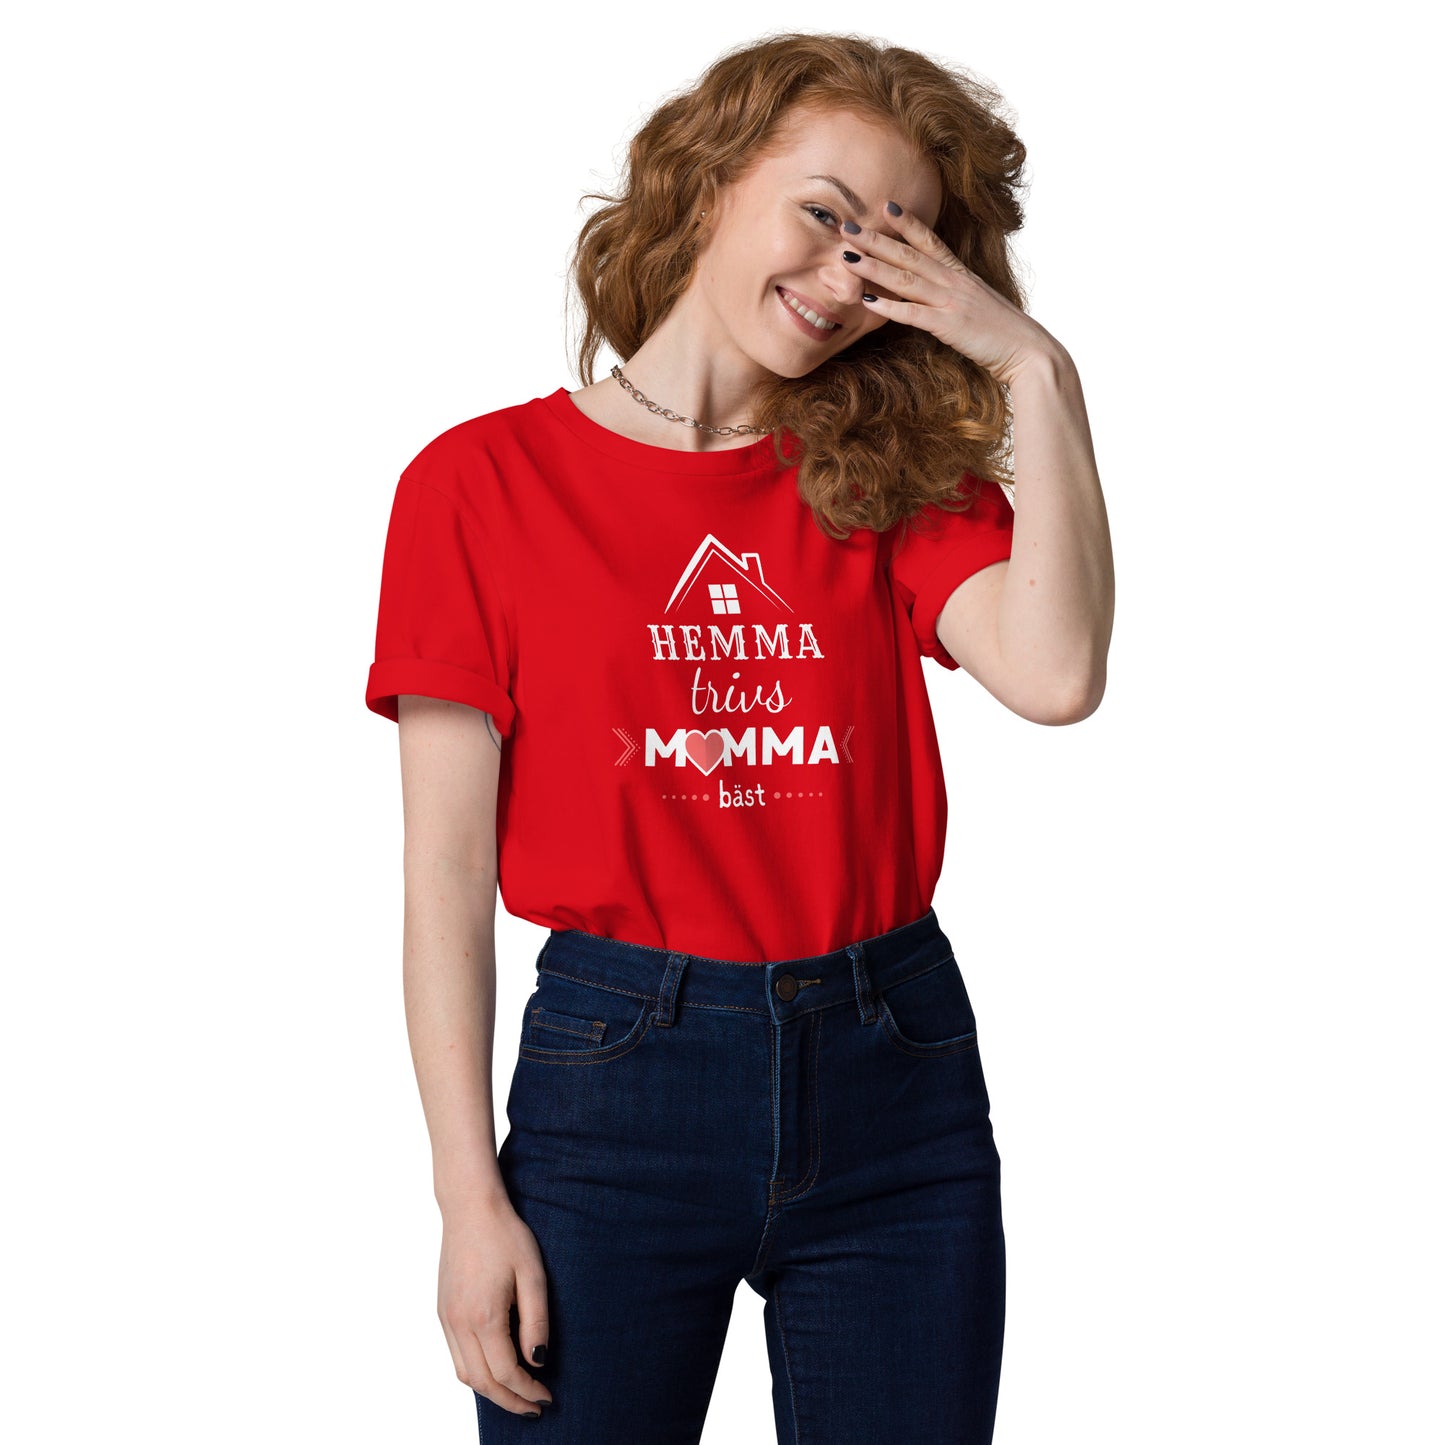 T-Shirt Dam Organic - Hemma trivs mamma bäst